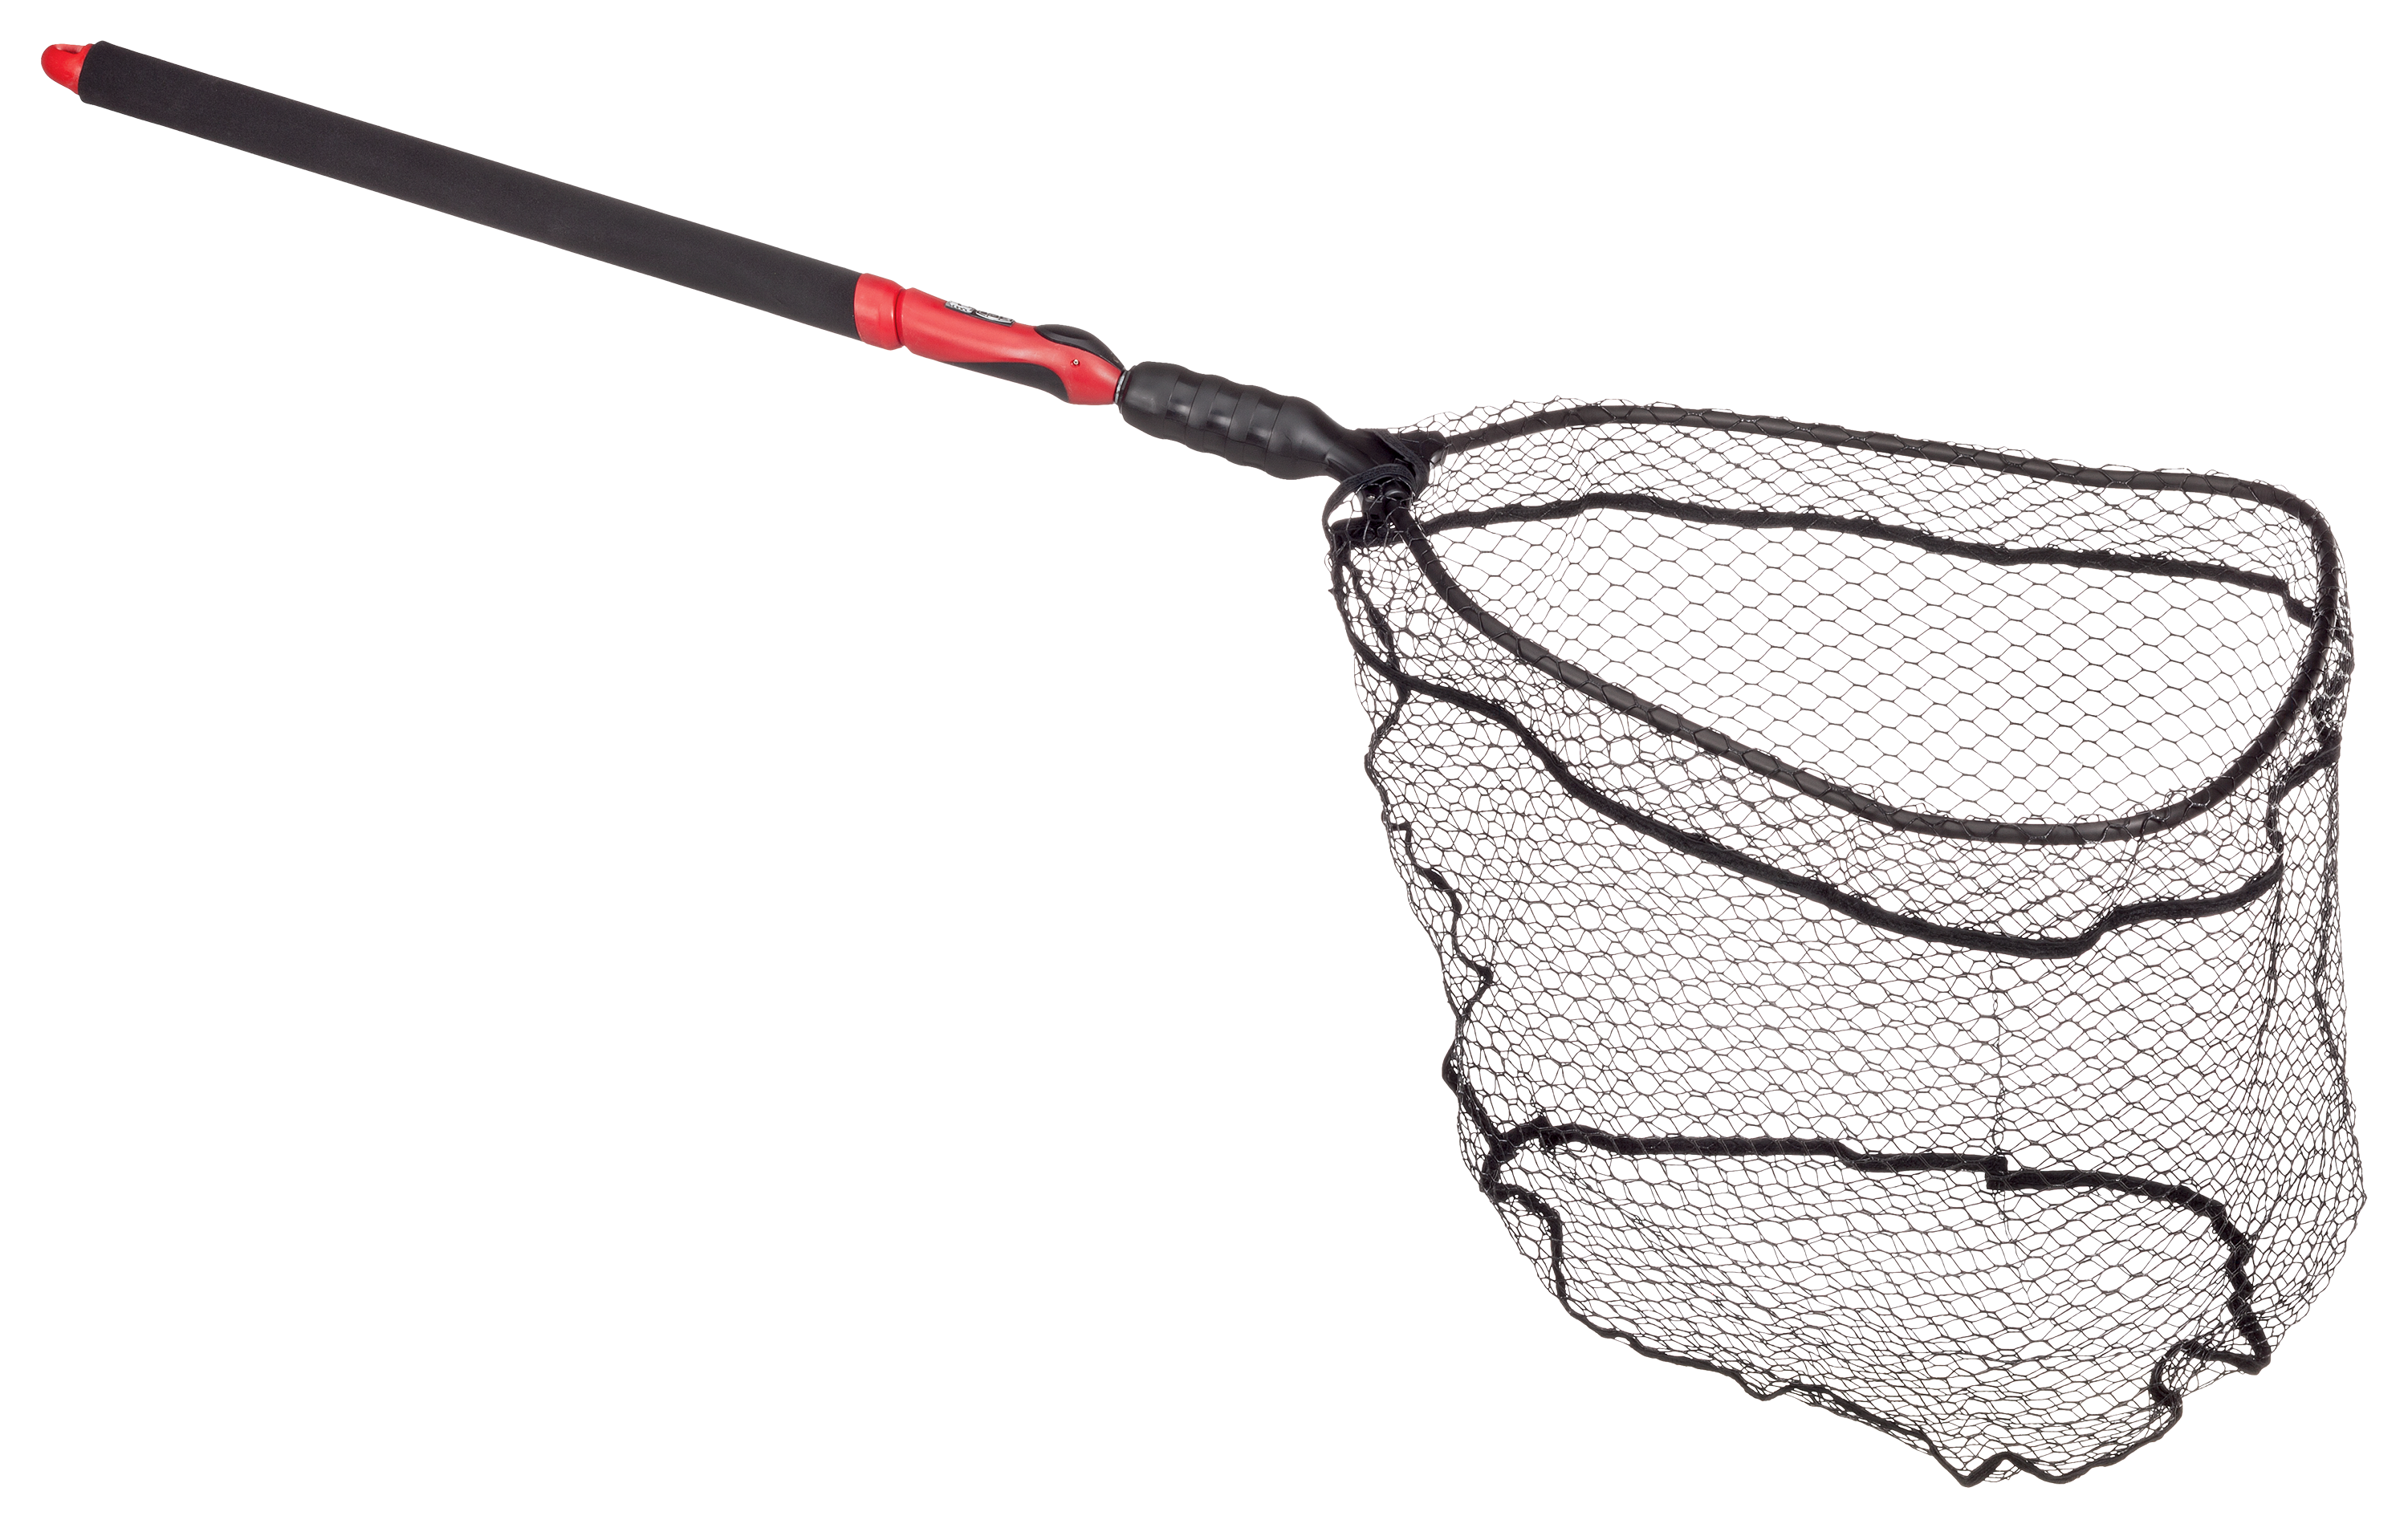  Ego S2 Slider Fishing Net, Ultimate Fishermen's Tool  Telescoping Handle, Replaceable Head, Salt & Freshwater, 29-60 Handle,  19x21 Inch Hoop : Sports & Outdoors